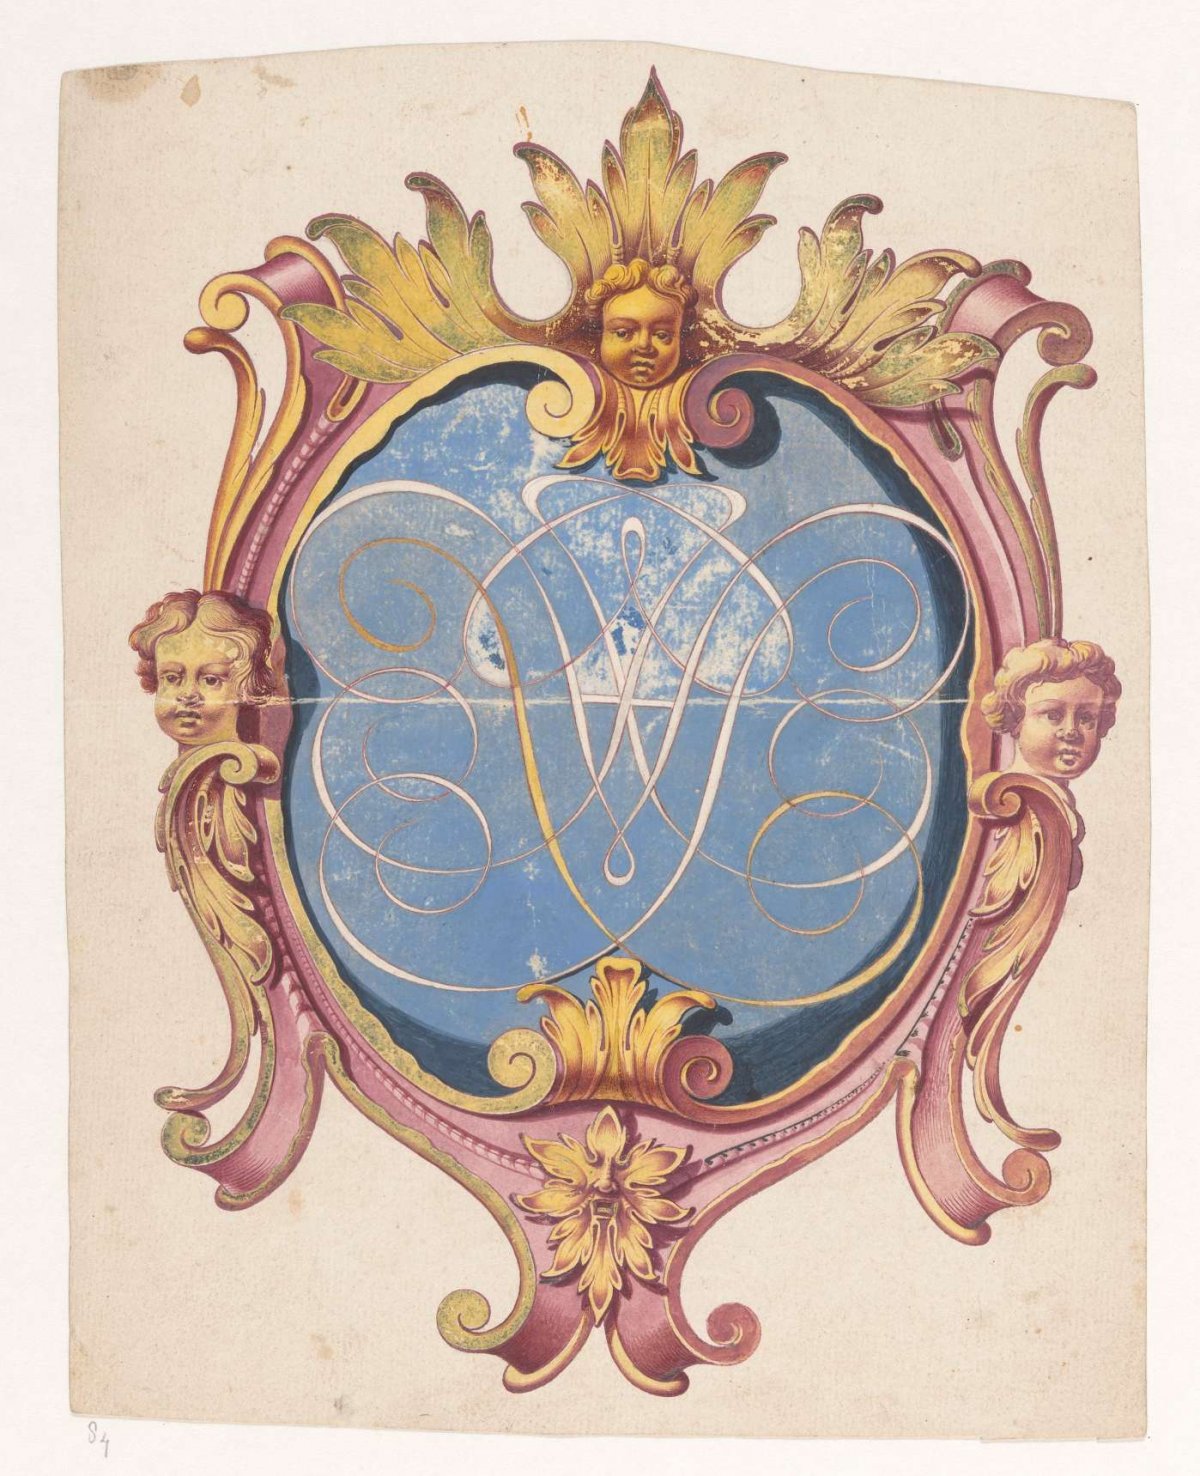 Coat of arms with monogram, Jan Brandes, 1787 - 1808